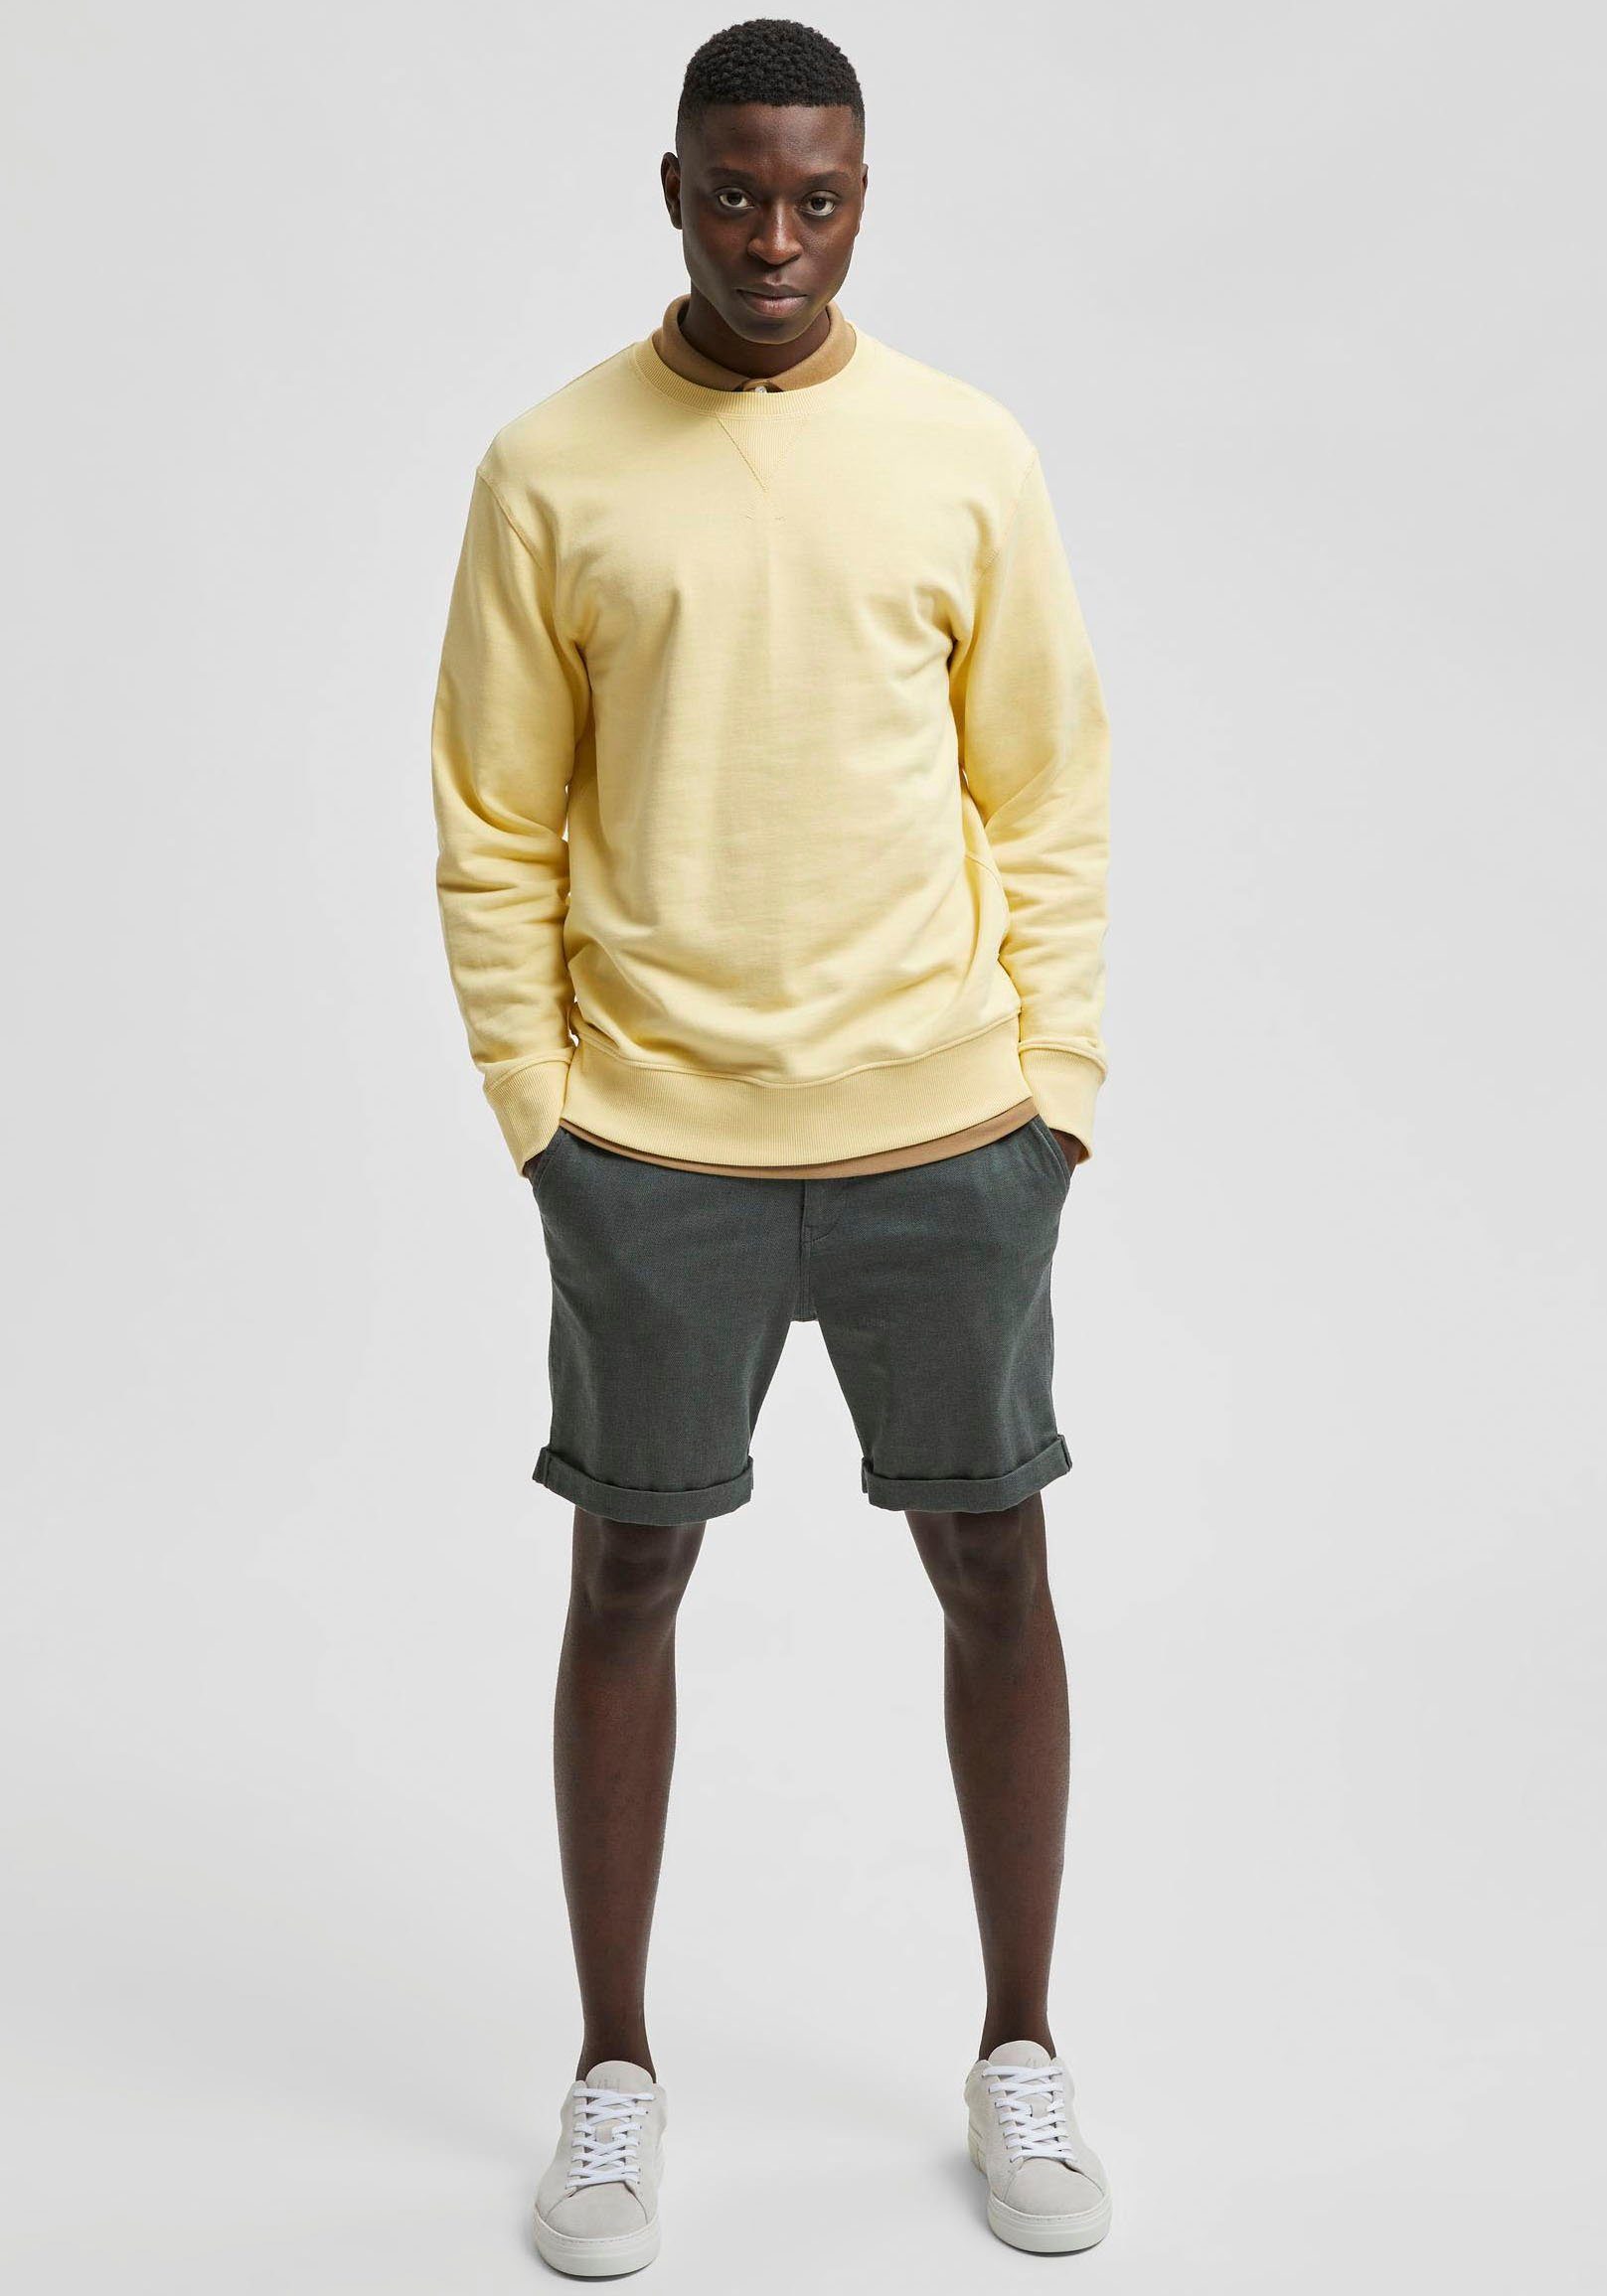 S Gr Herren Kleidung Pullover & Sweater Pullover mit V-Ausschnitt Selected Homme Pullover mit V-Ausschnitt grau Selected Homme Pullover 